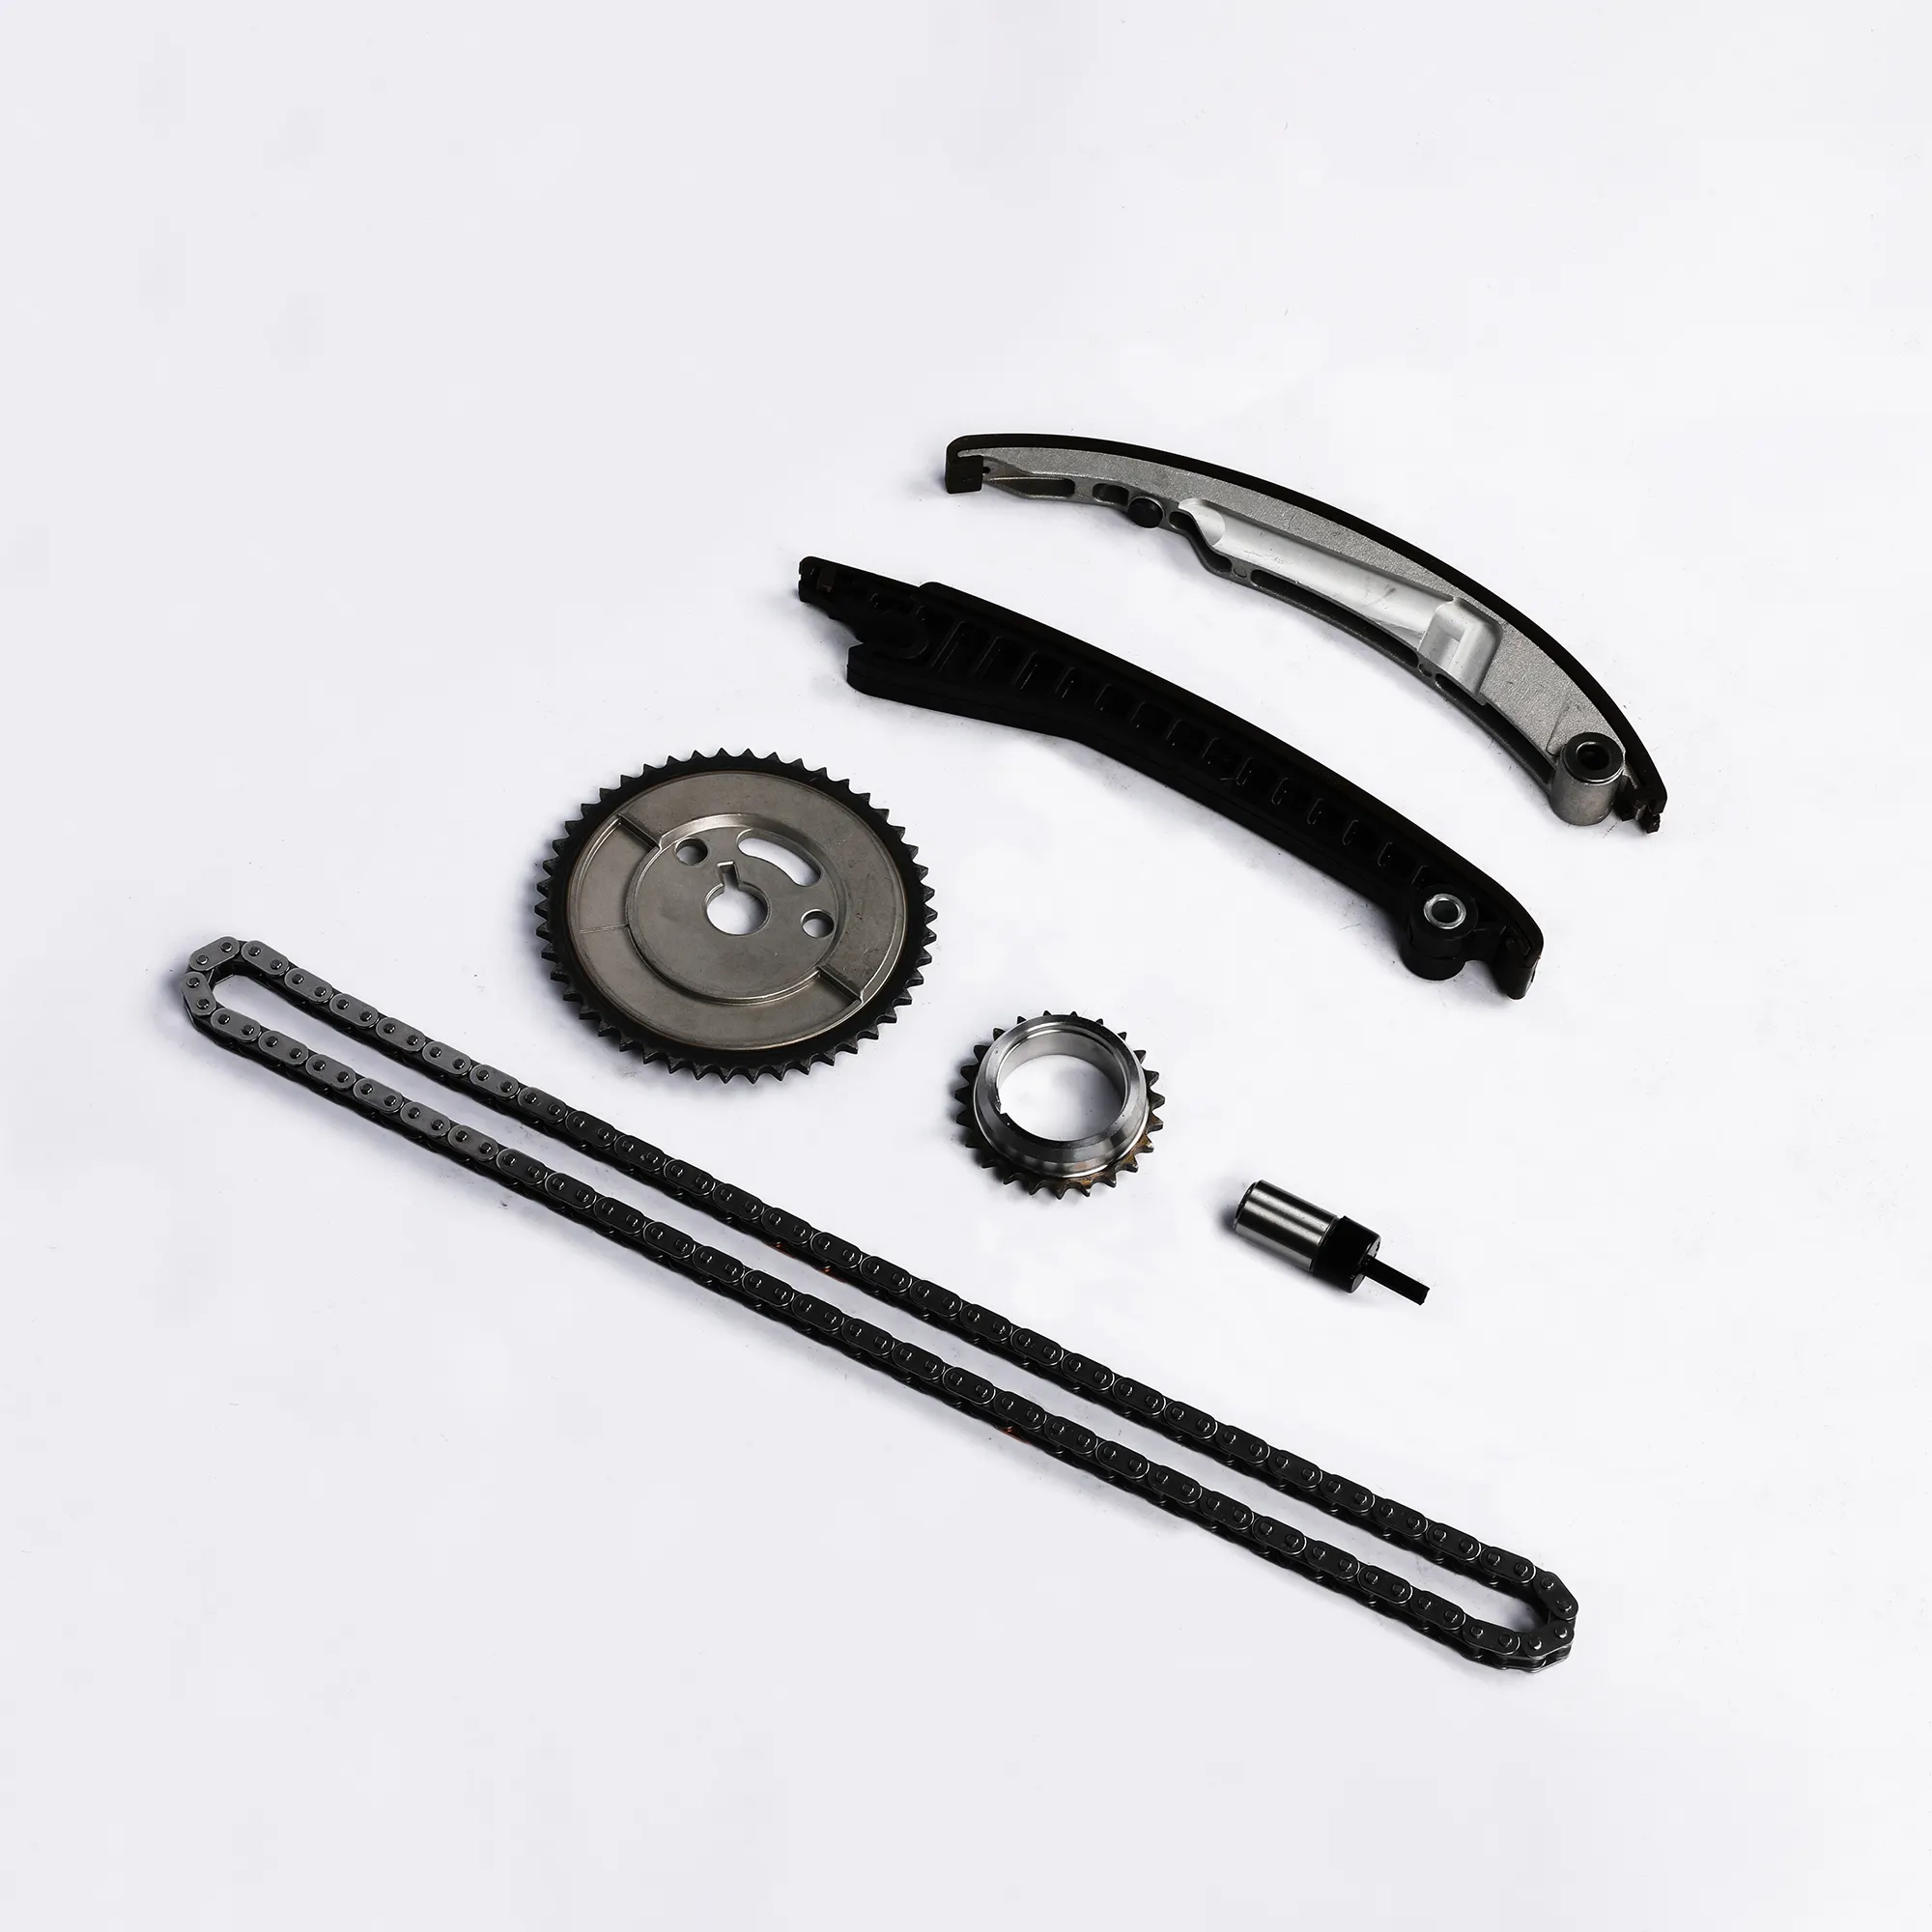 For Fiat 1.6E 1.8 16V Automobile Engine Timing Chain Repair Kit Overhaul Kit